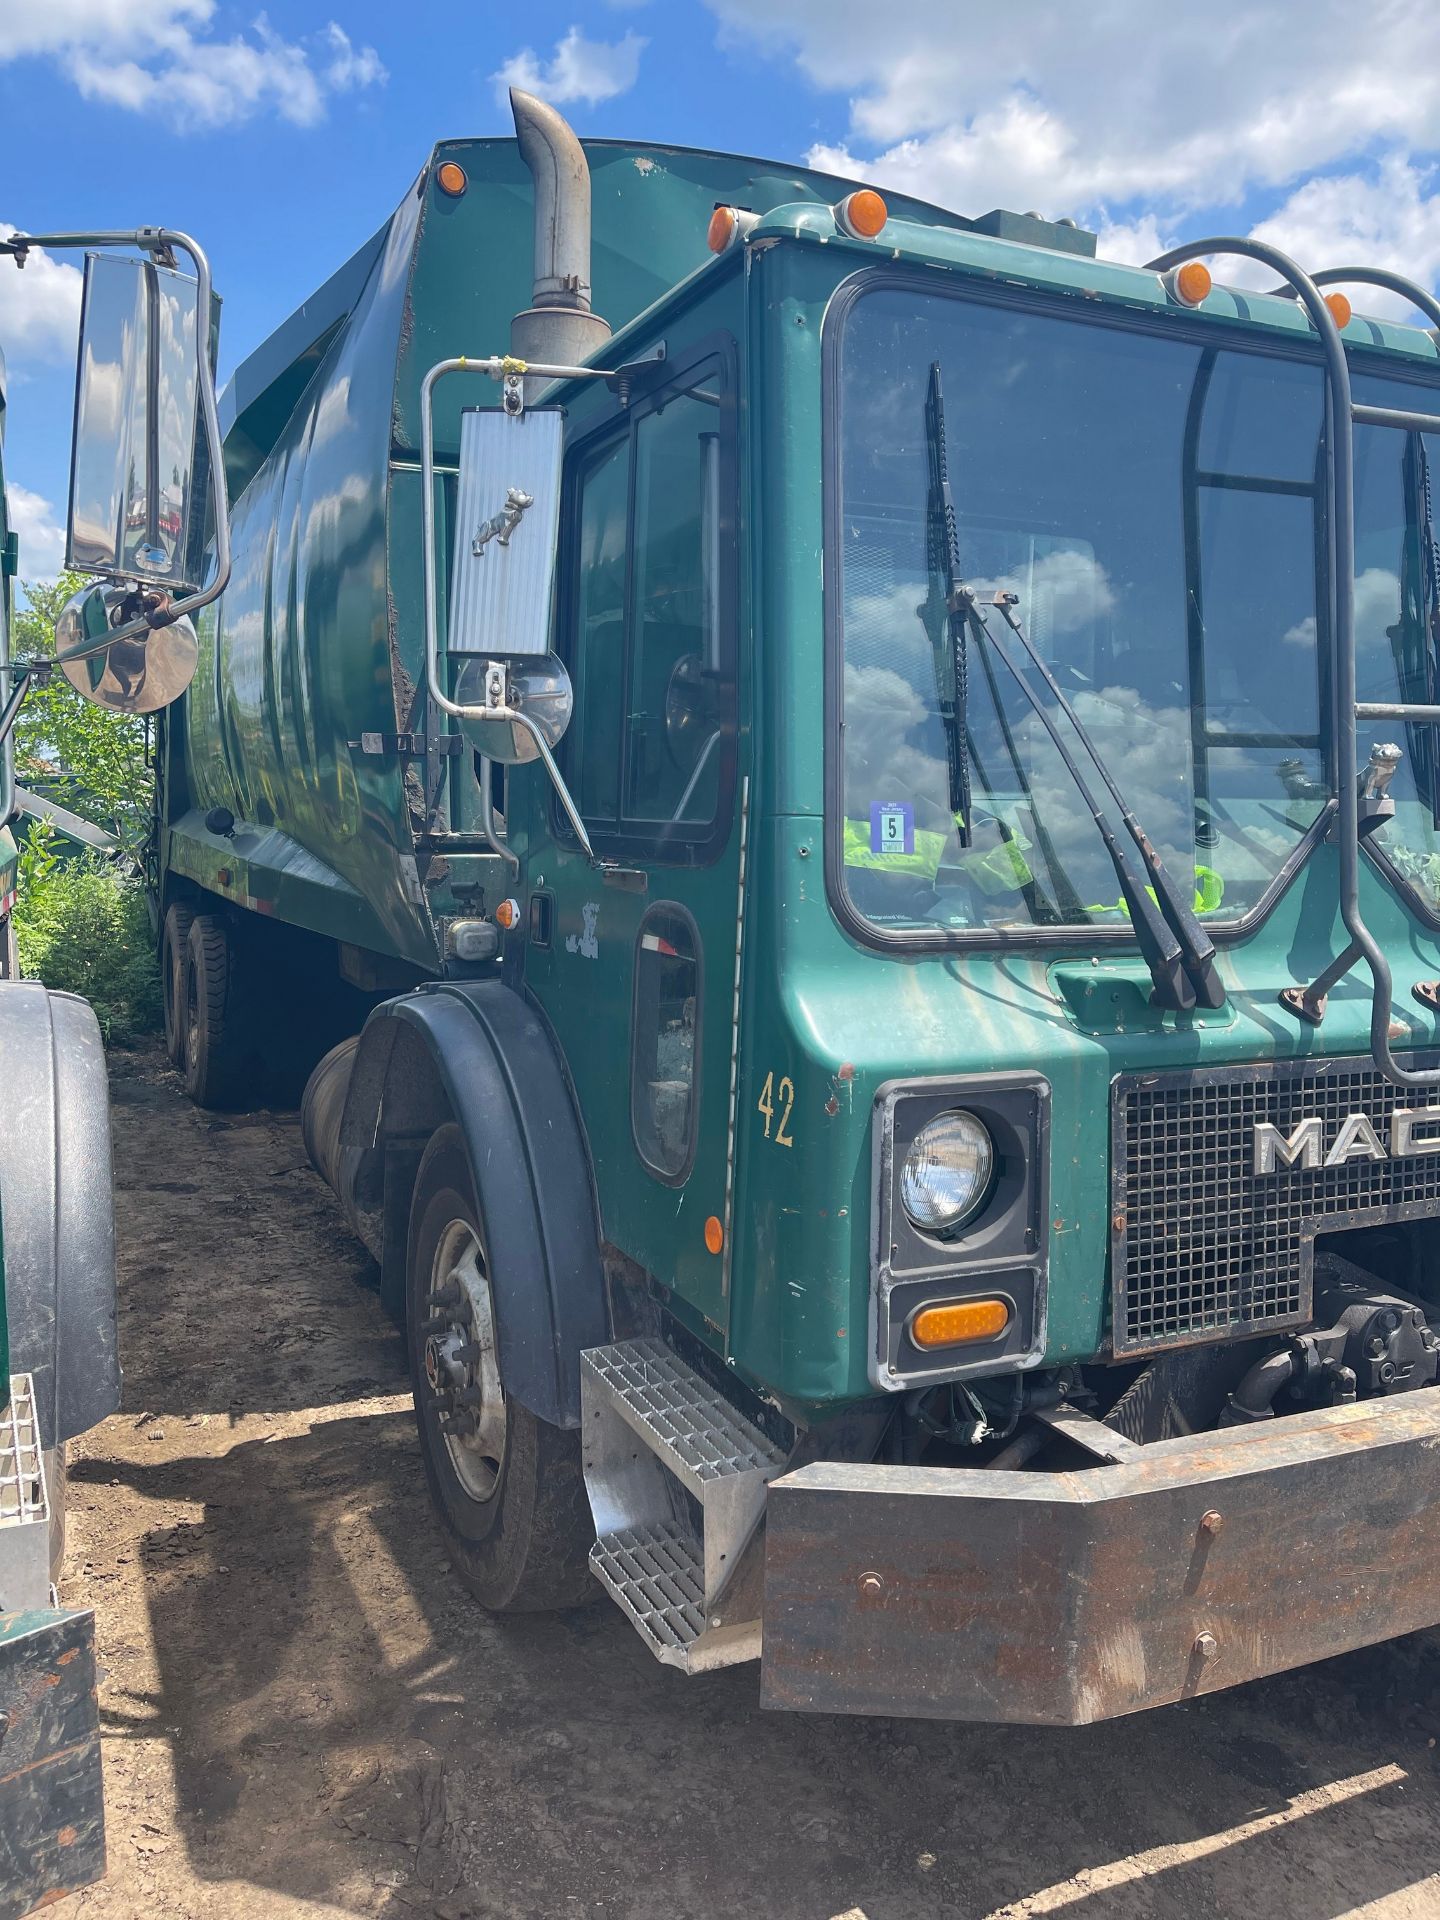 2001 - Mack MR690S Garbarge / Waste Truck - Image 2 of 2